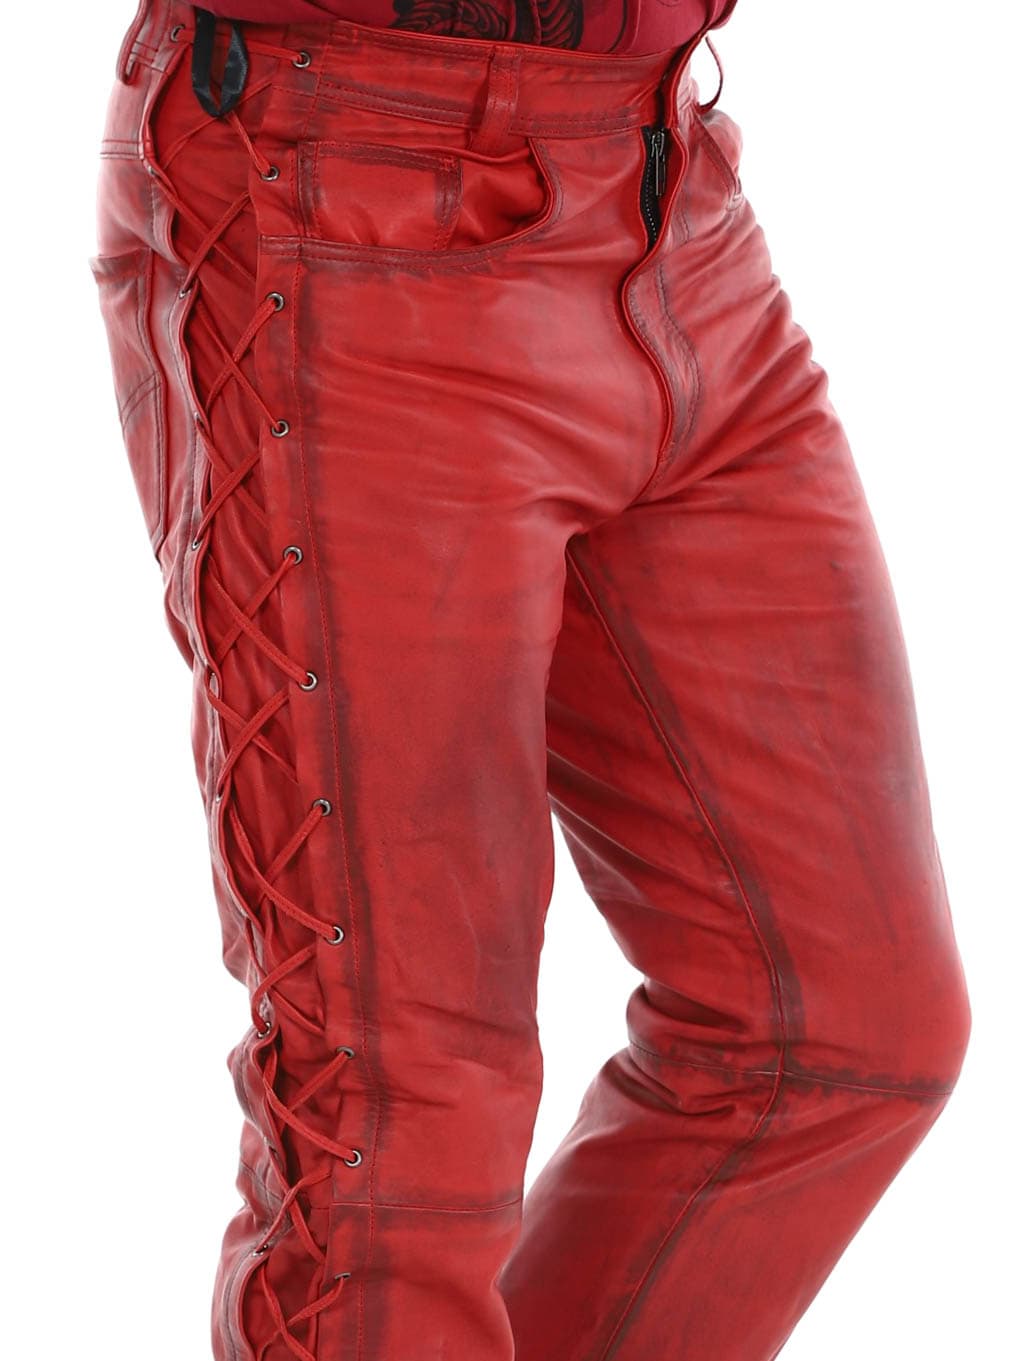 RD Premium Leather Pants red5.jpg